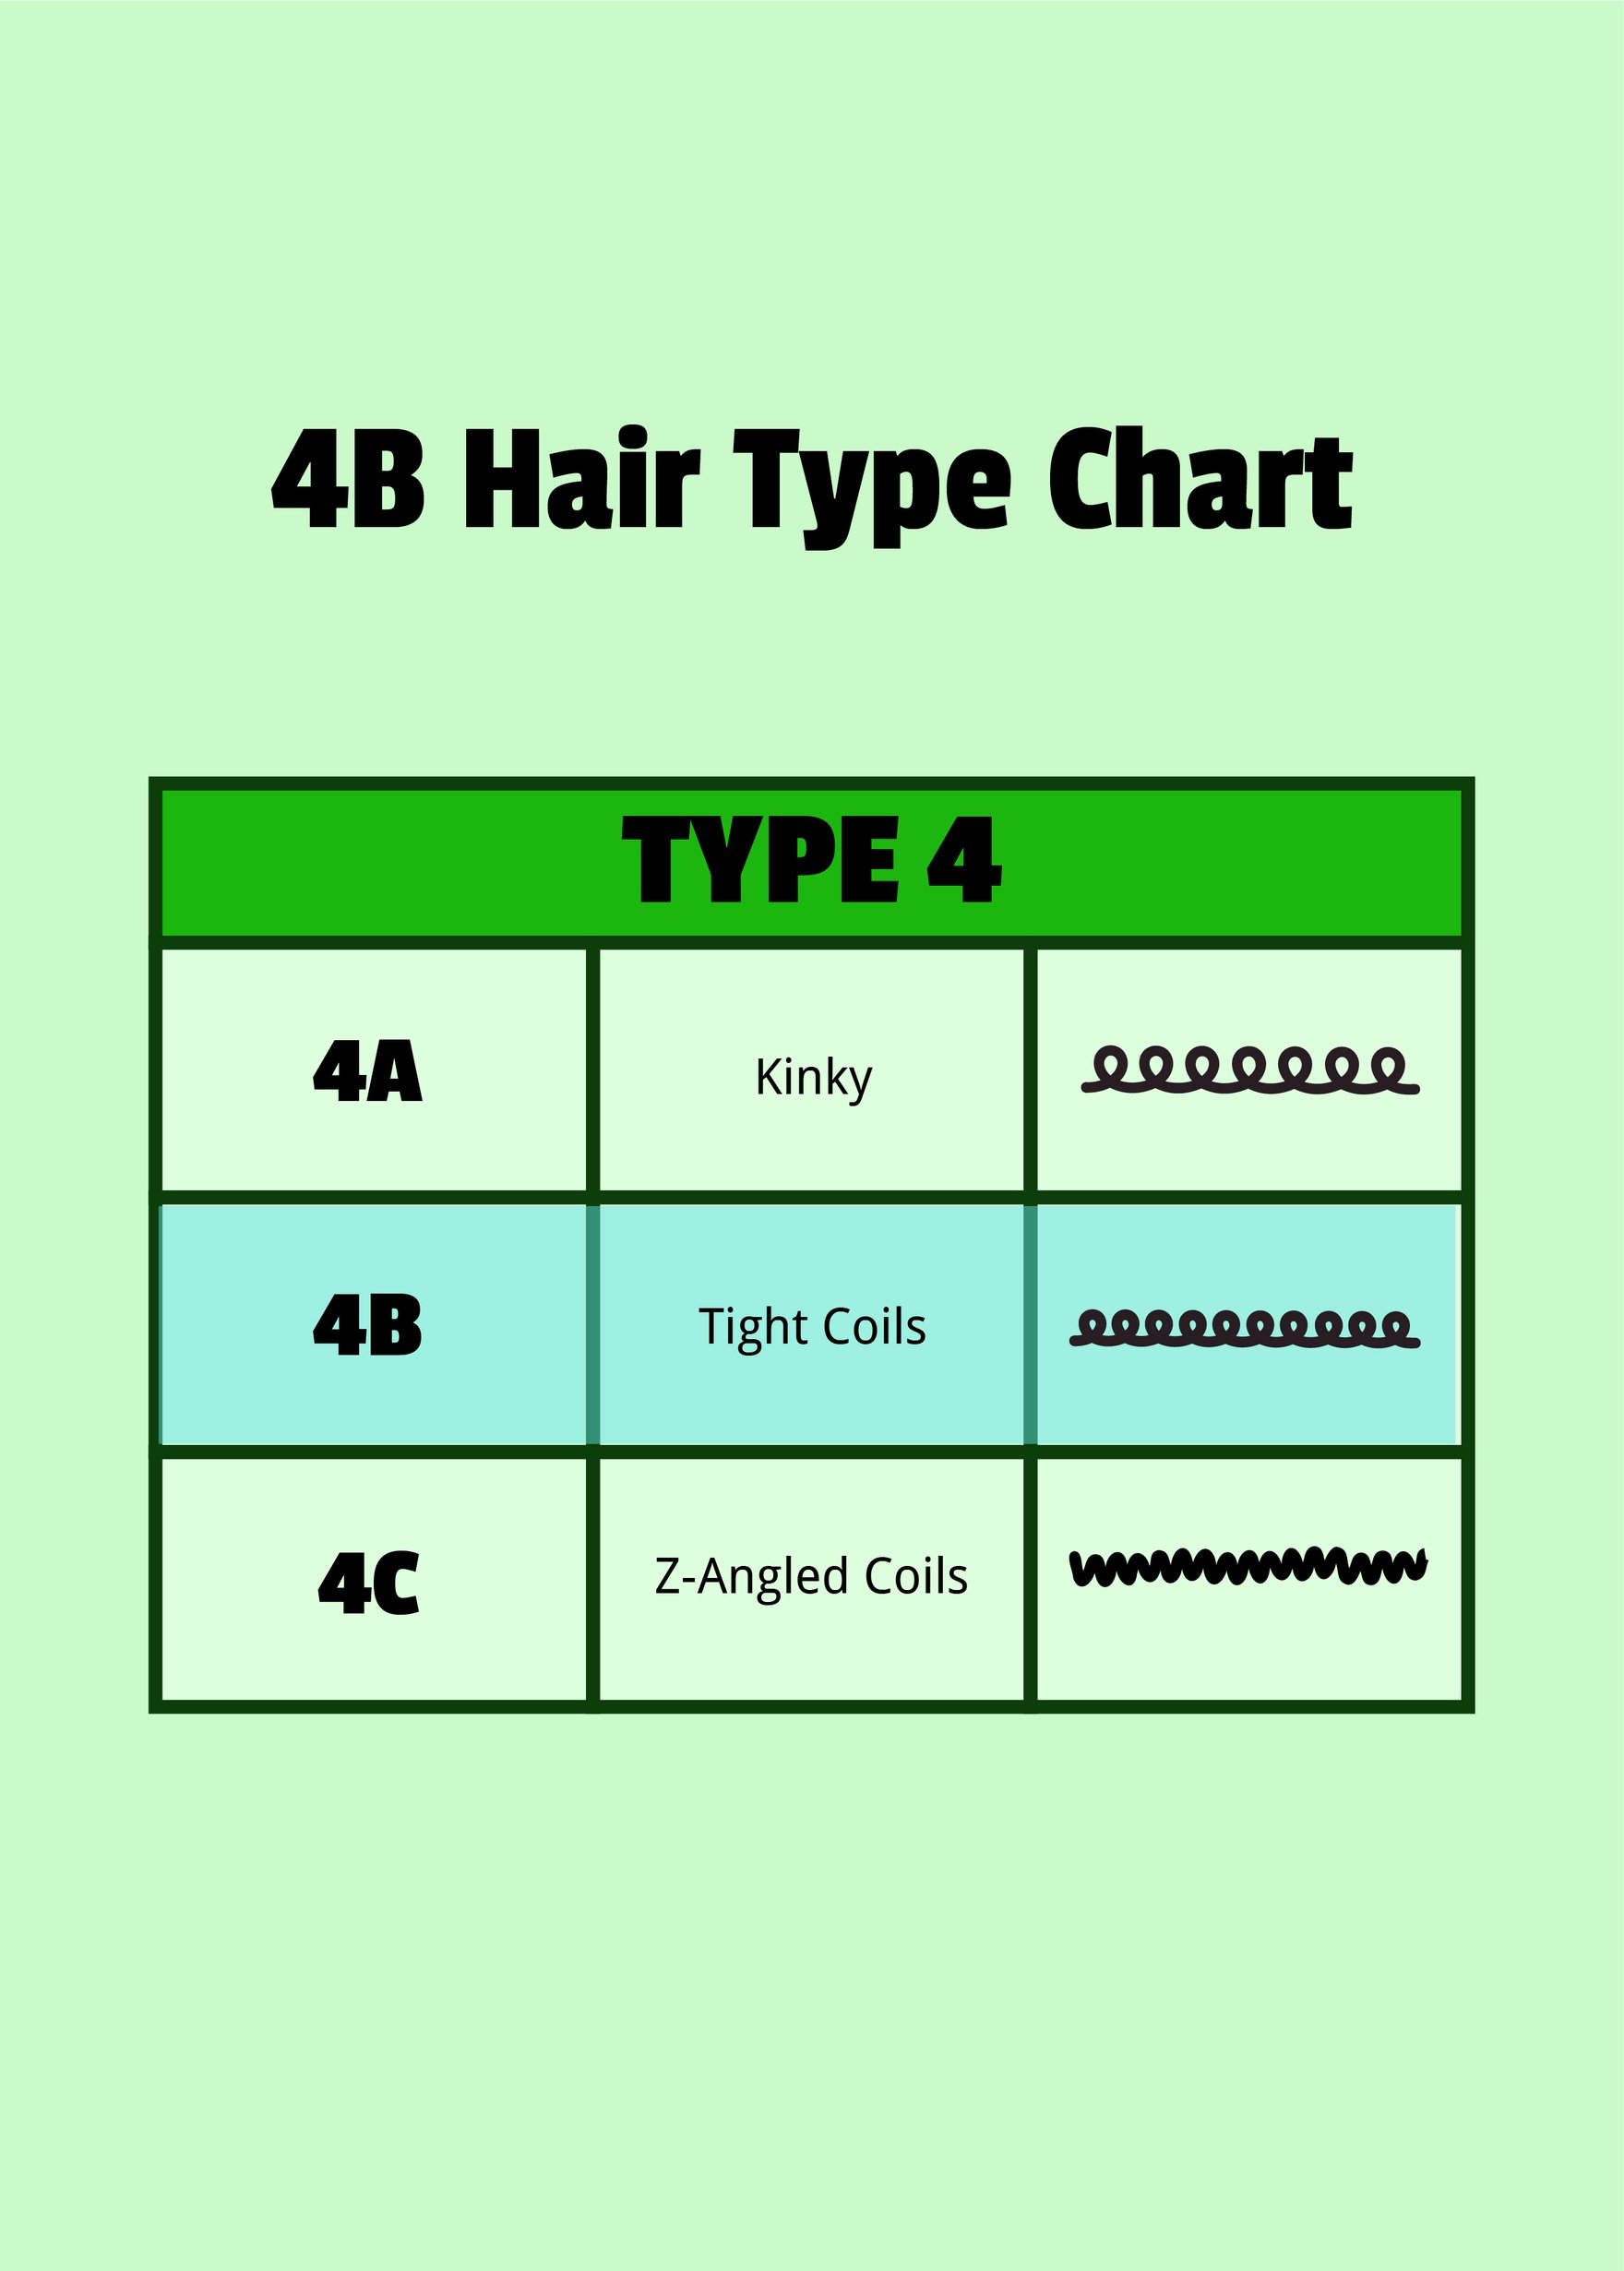 4B Hair Type Chart